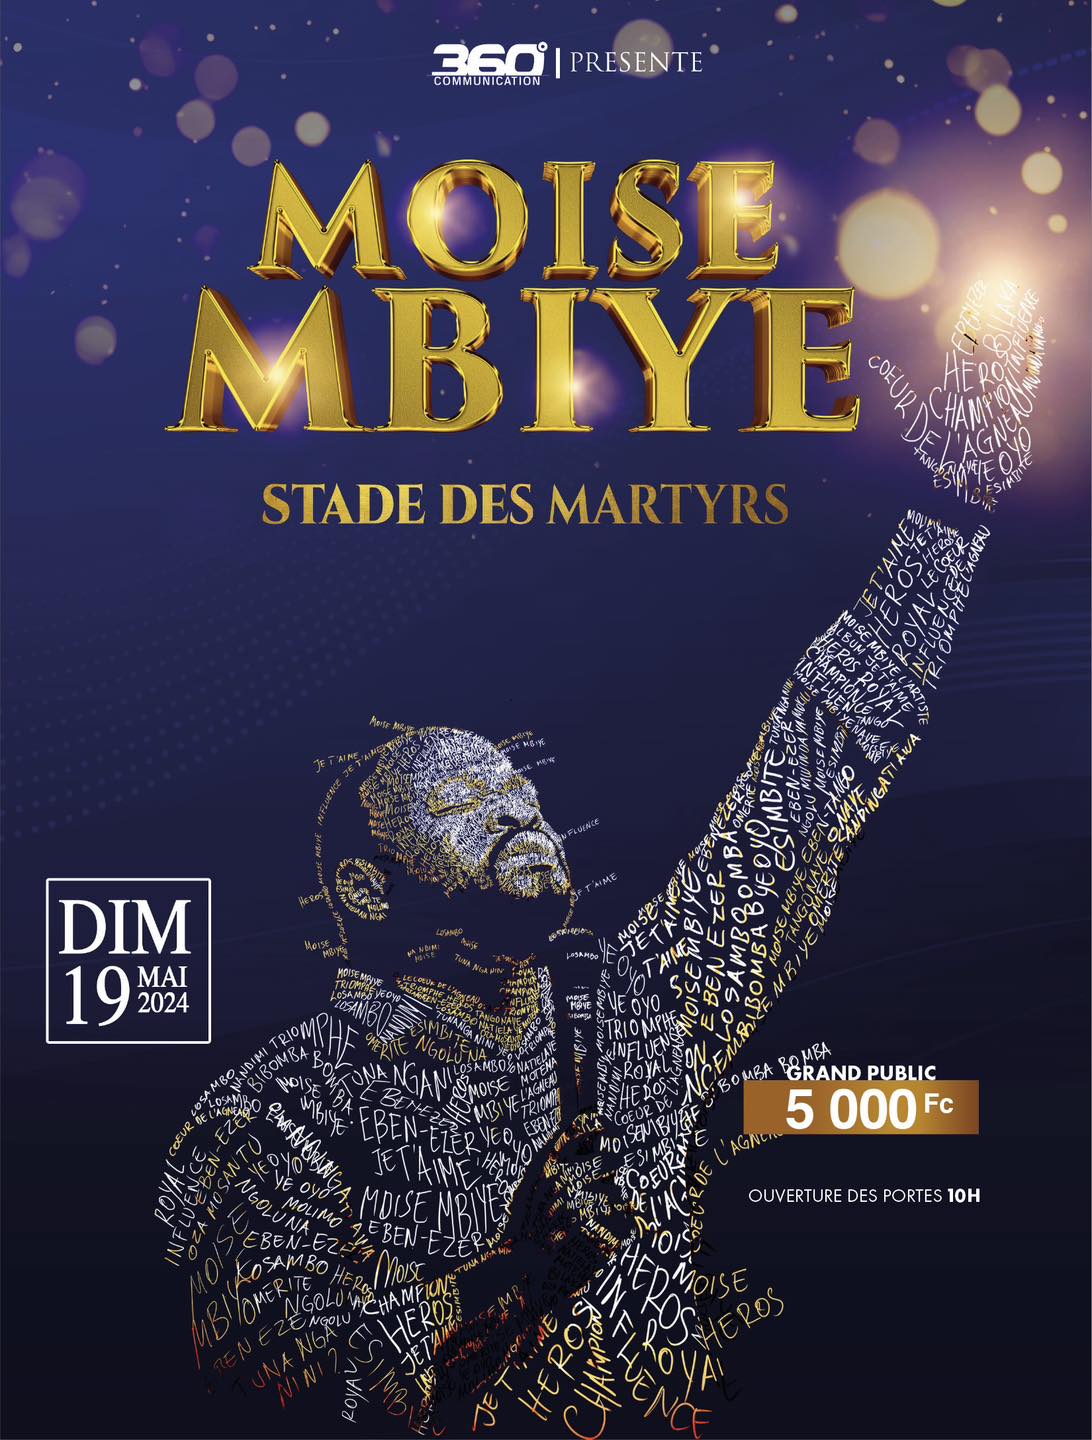 Moise Mbiye au stade des martyrs